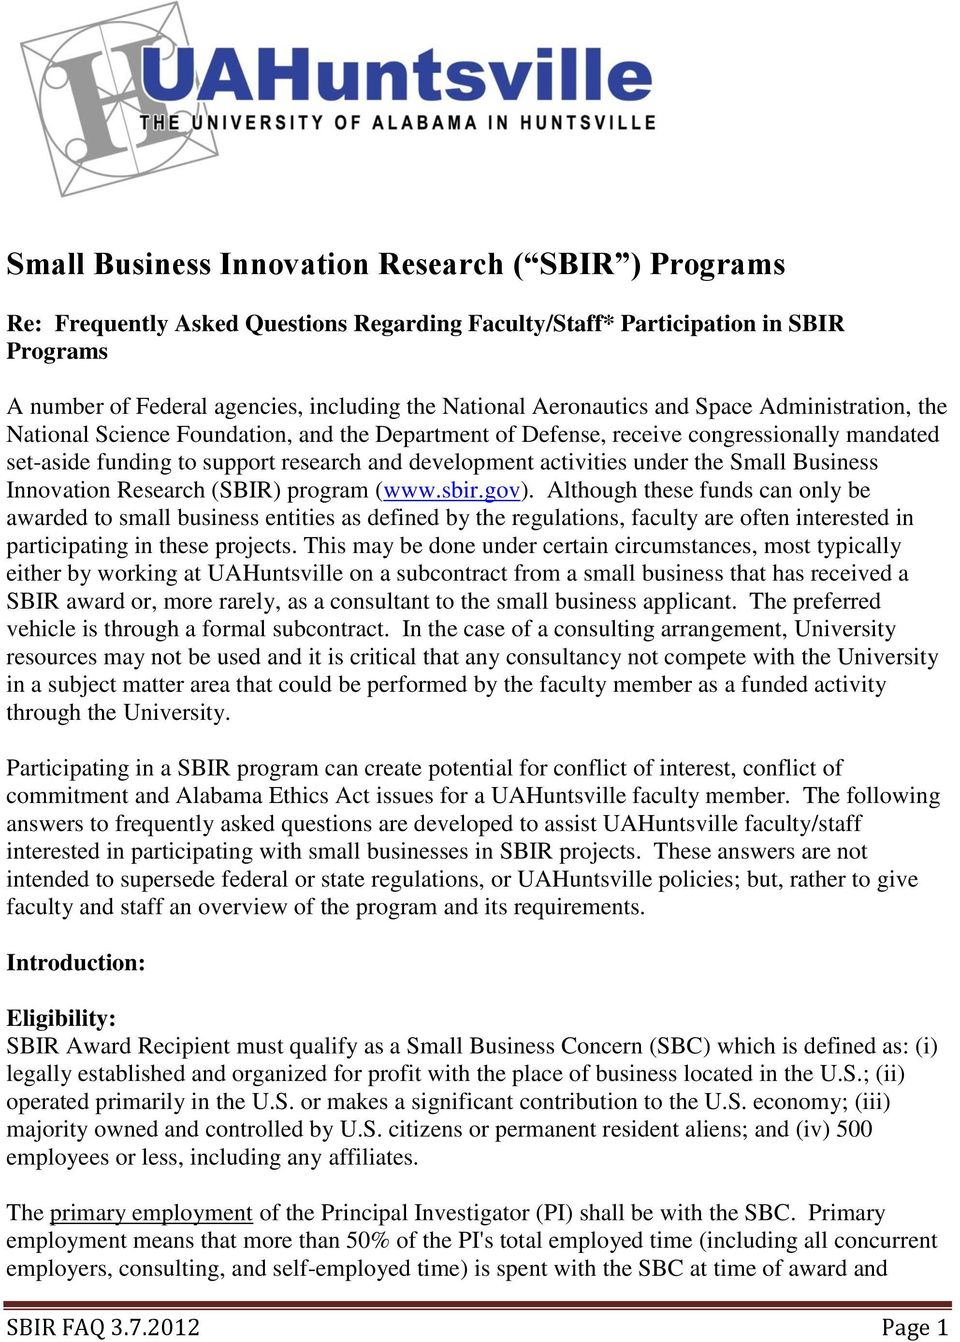 under the Small Business Innovation Research (SBIR) program (www.sbir.gov).